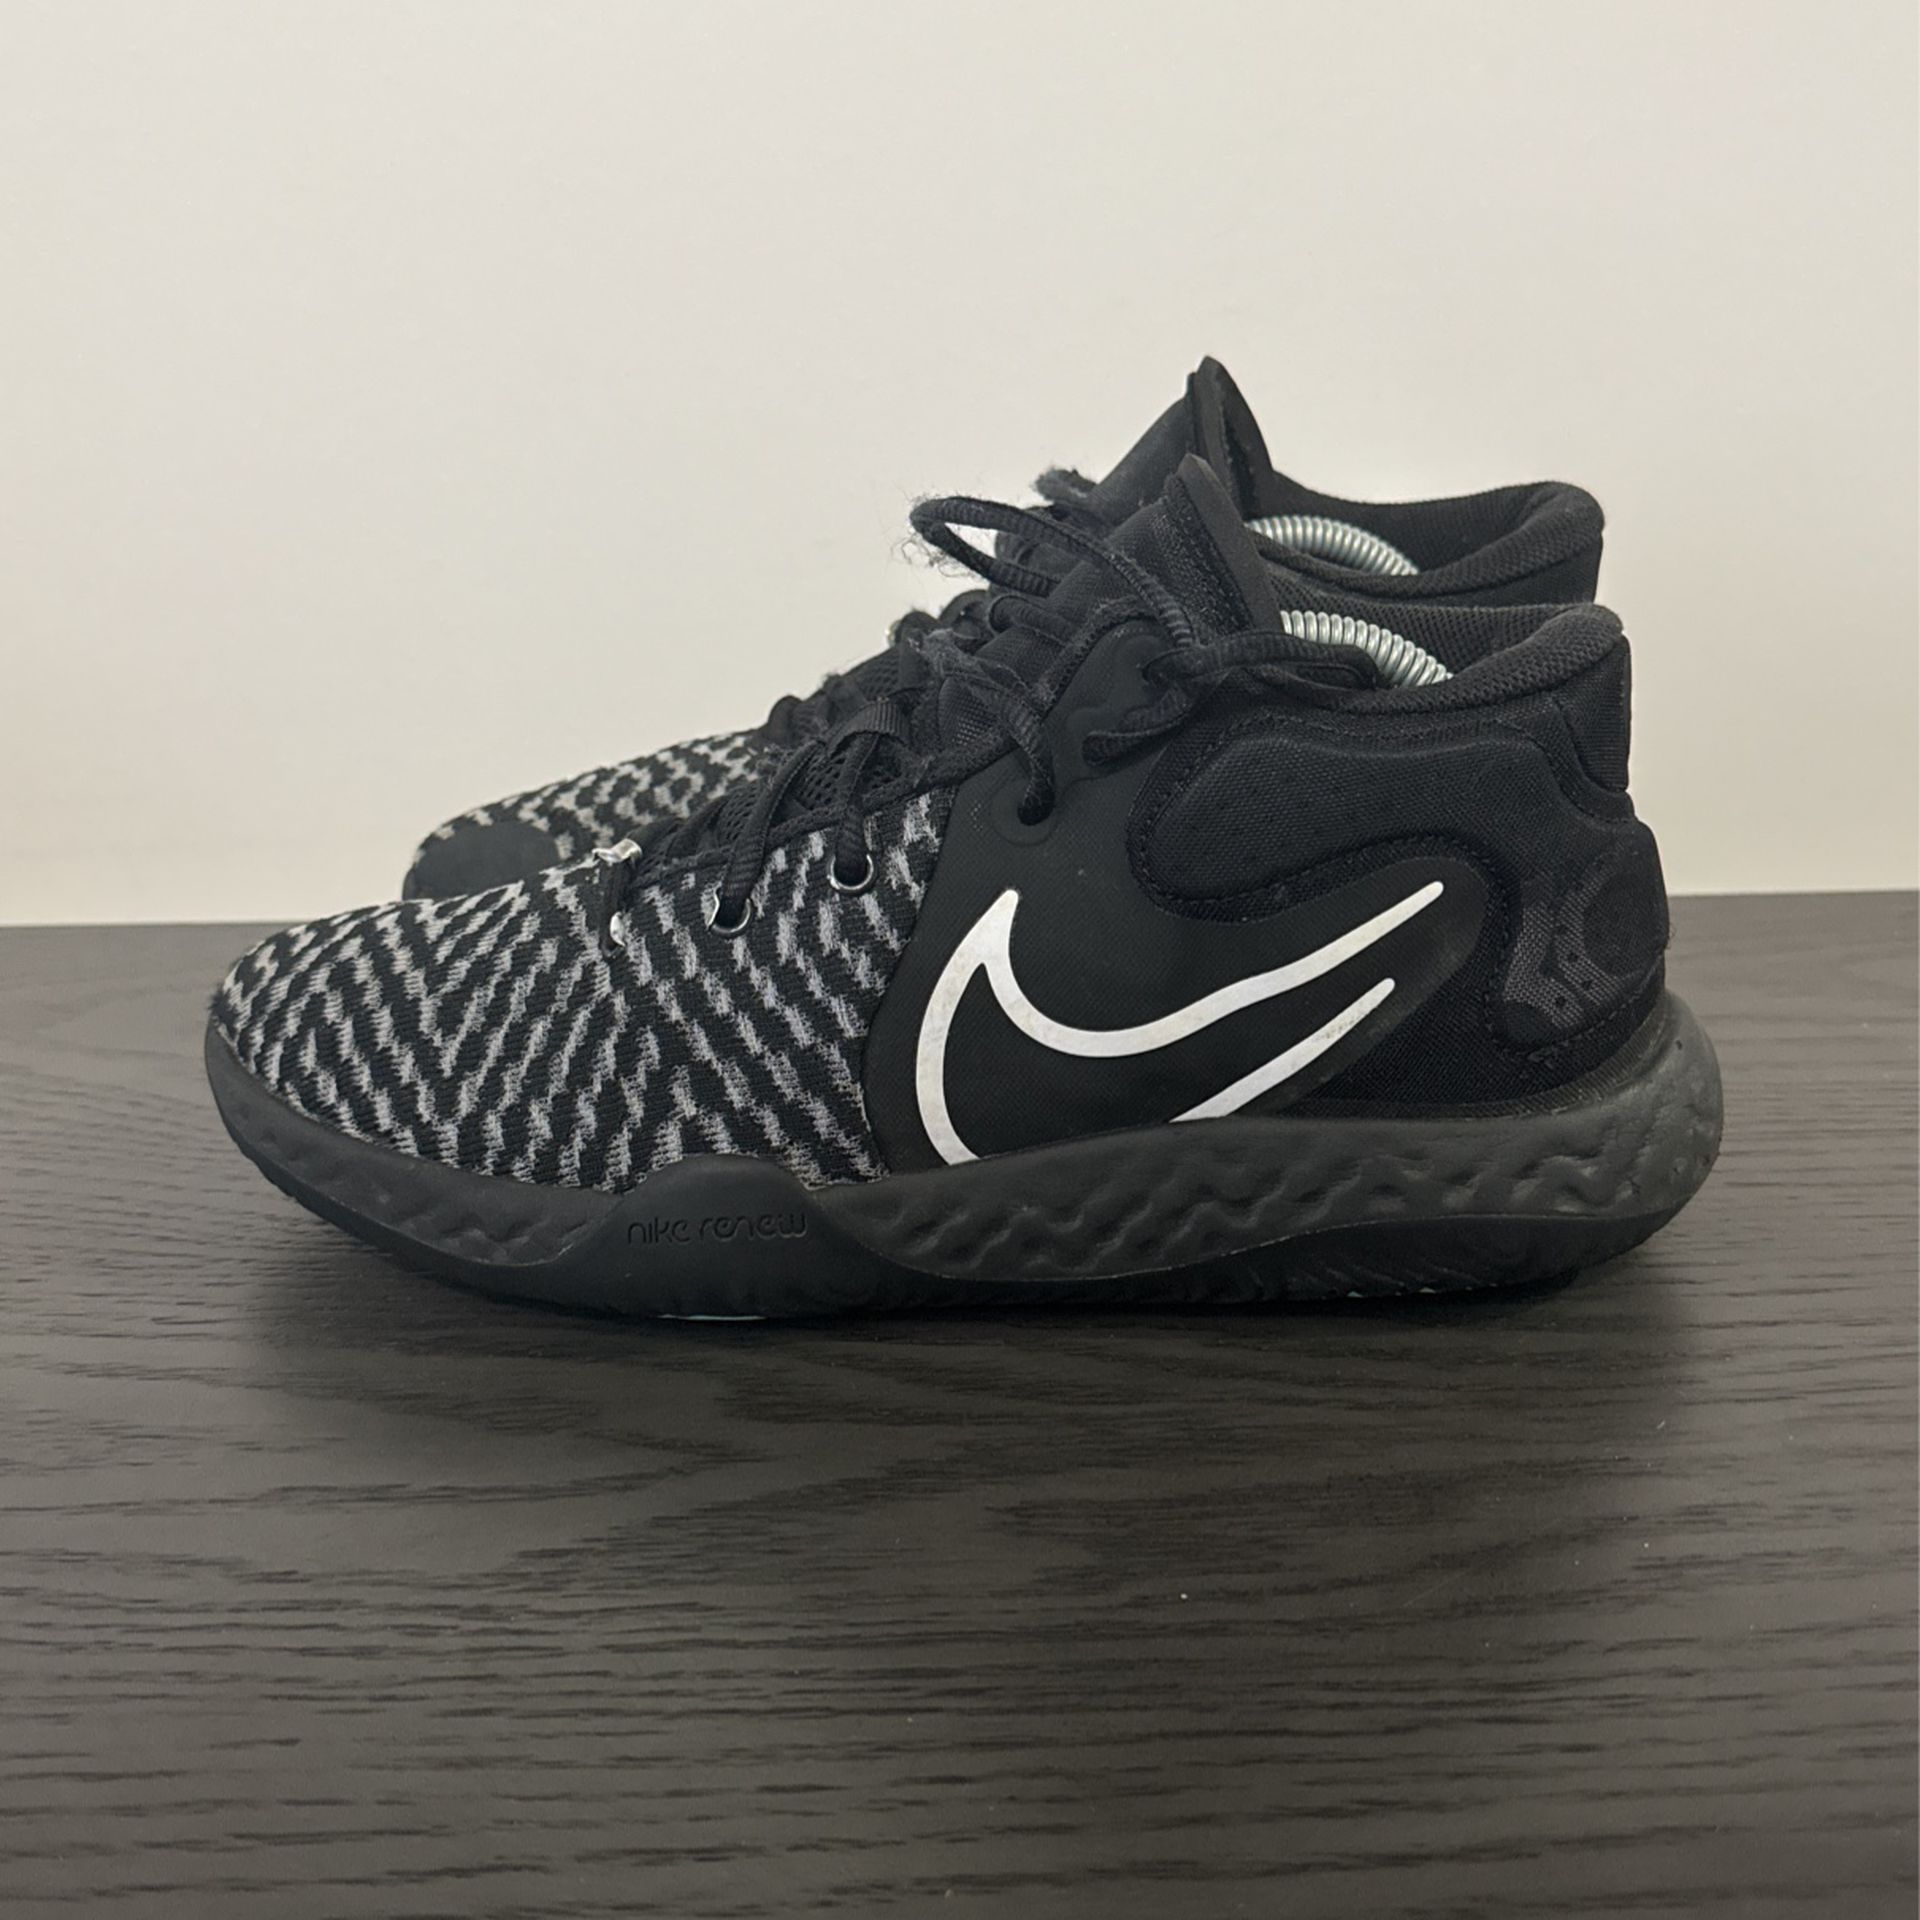 Nike KD basketball shoes size 9.5